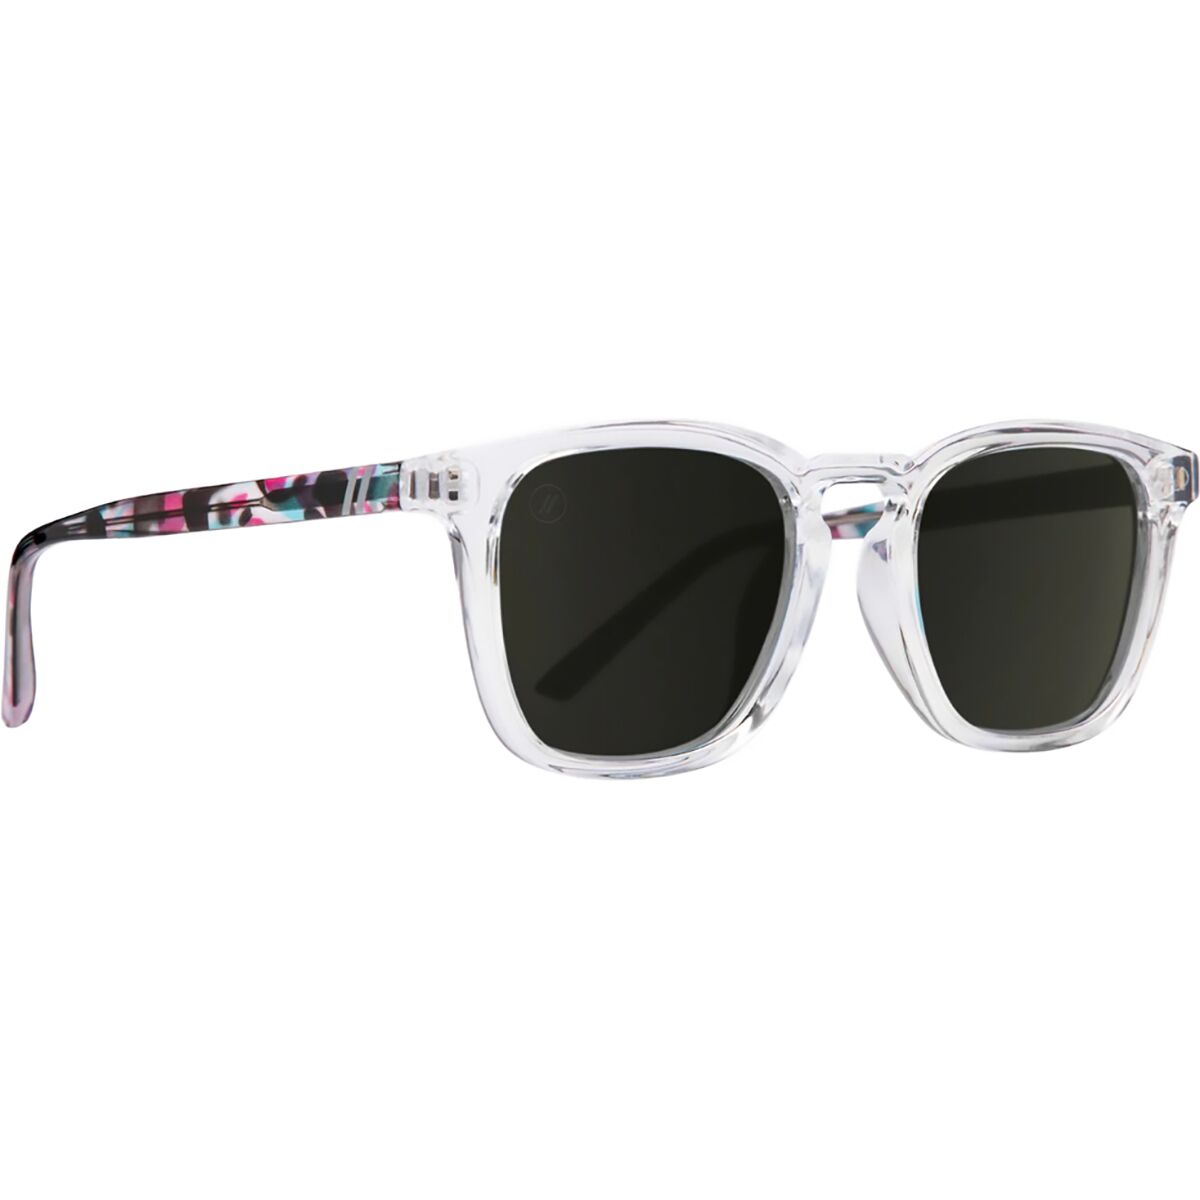 Blenders Eyewear The Yacht Week Smoke Sydney Polarized Sunglasses